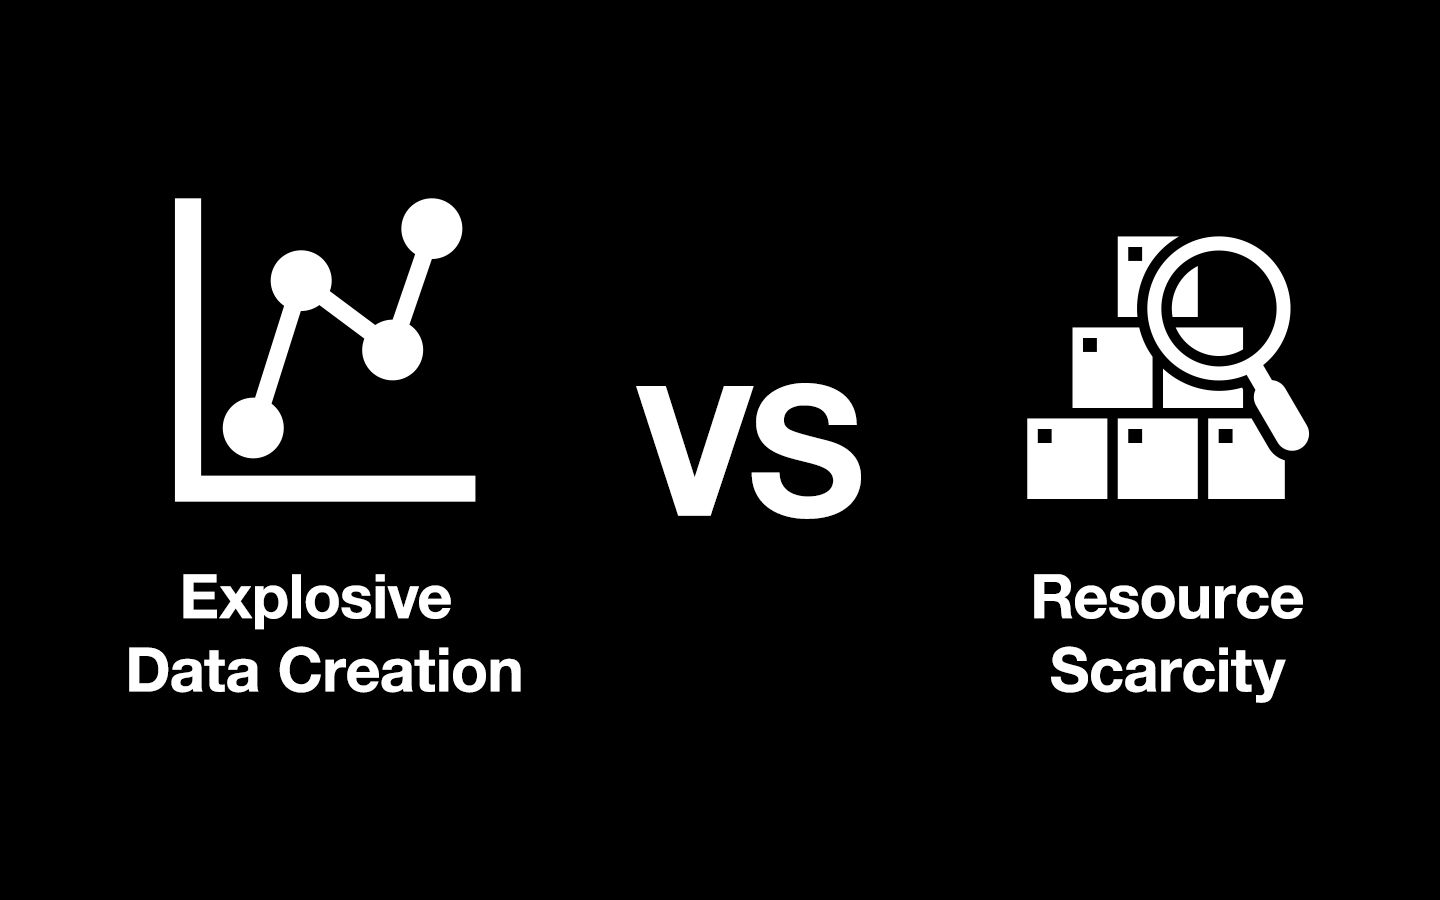 Explosive Data Creation vs. Resource Scarcity